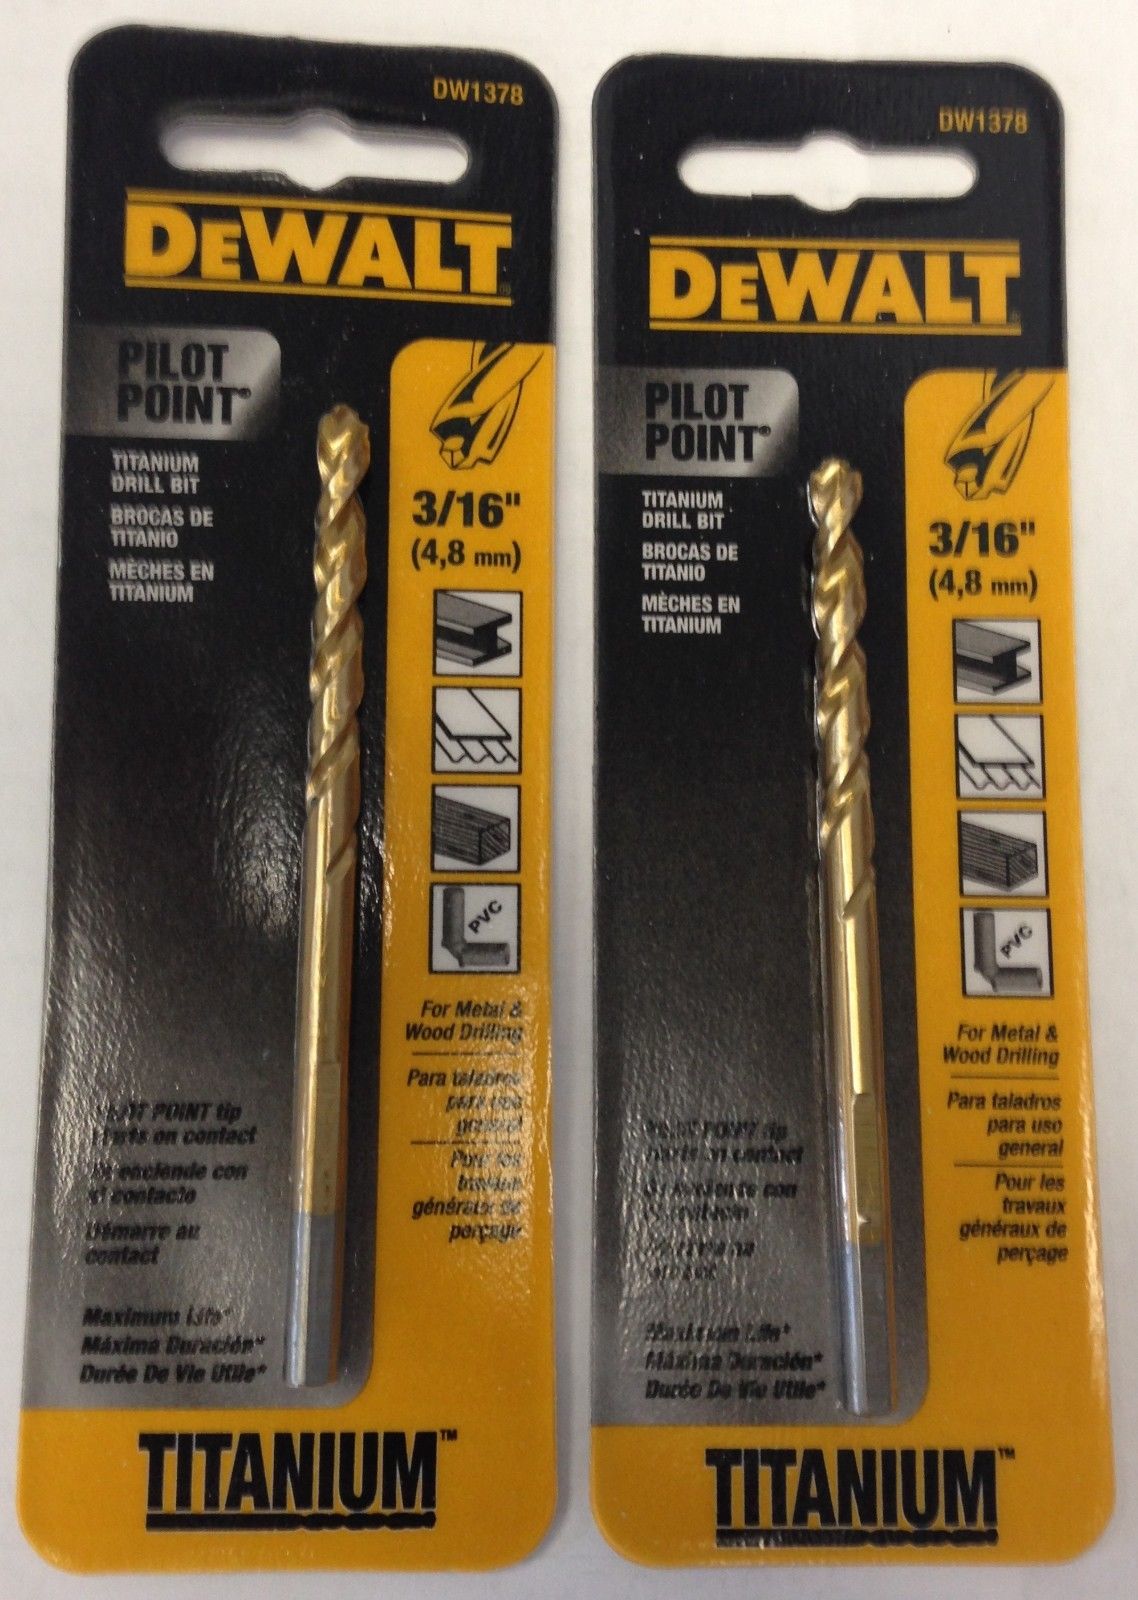 Dewalt DW1378 3/16" Pilot Point Titanium Drill Bit (2 Packs)